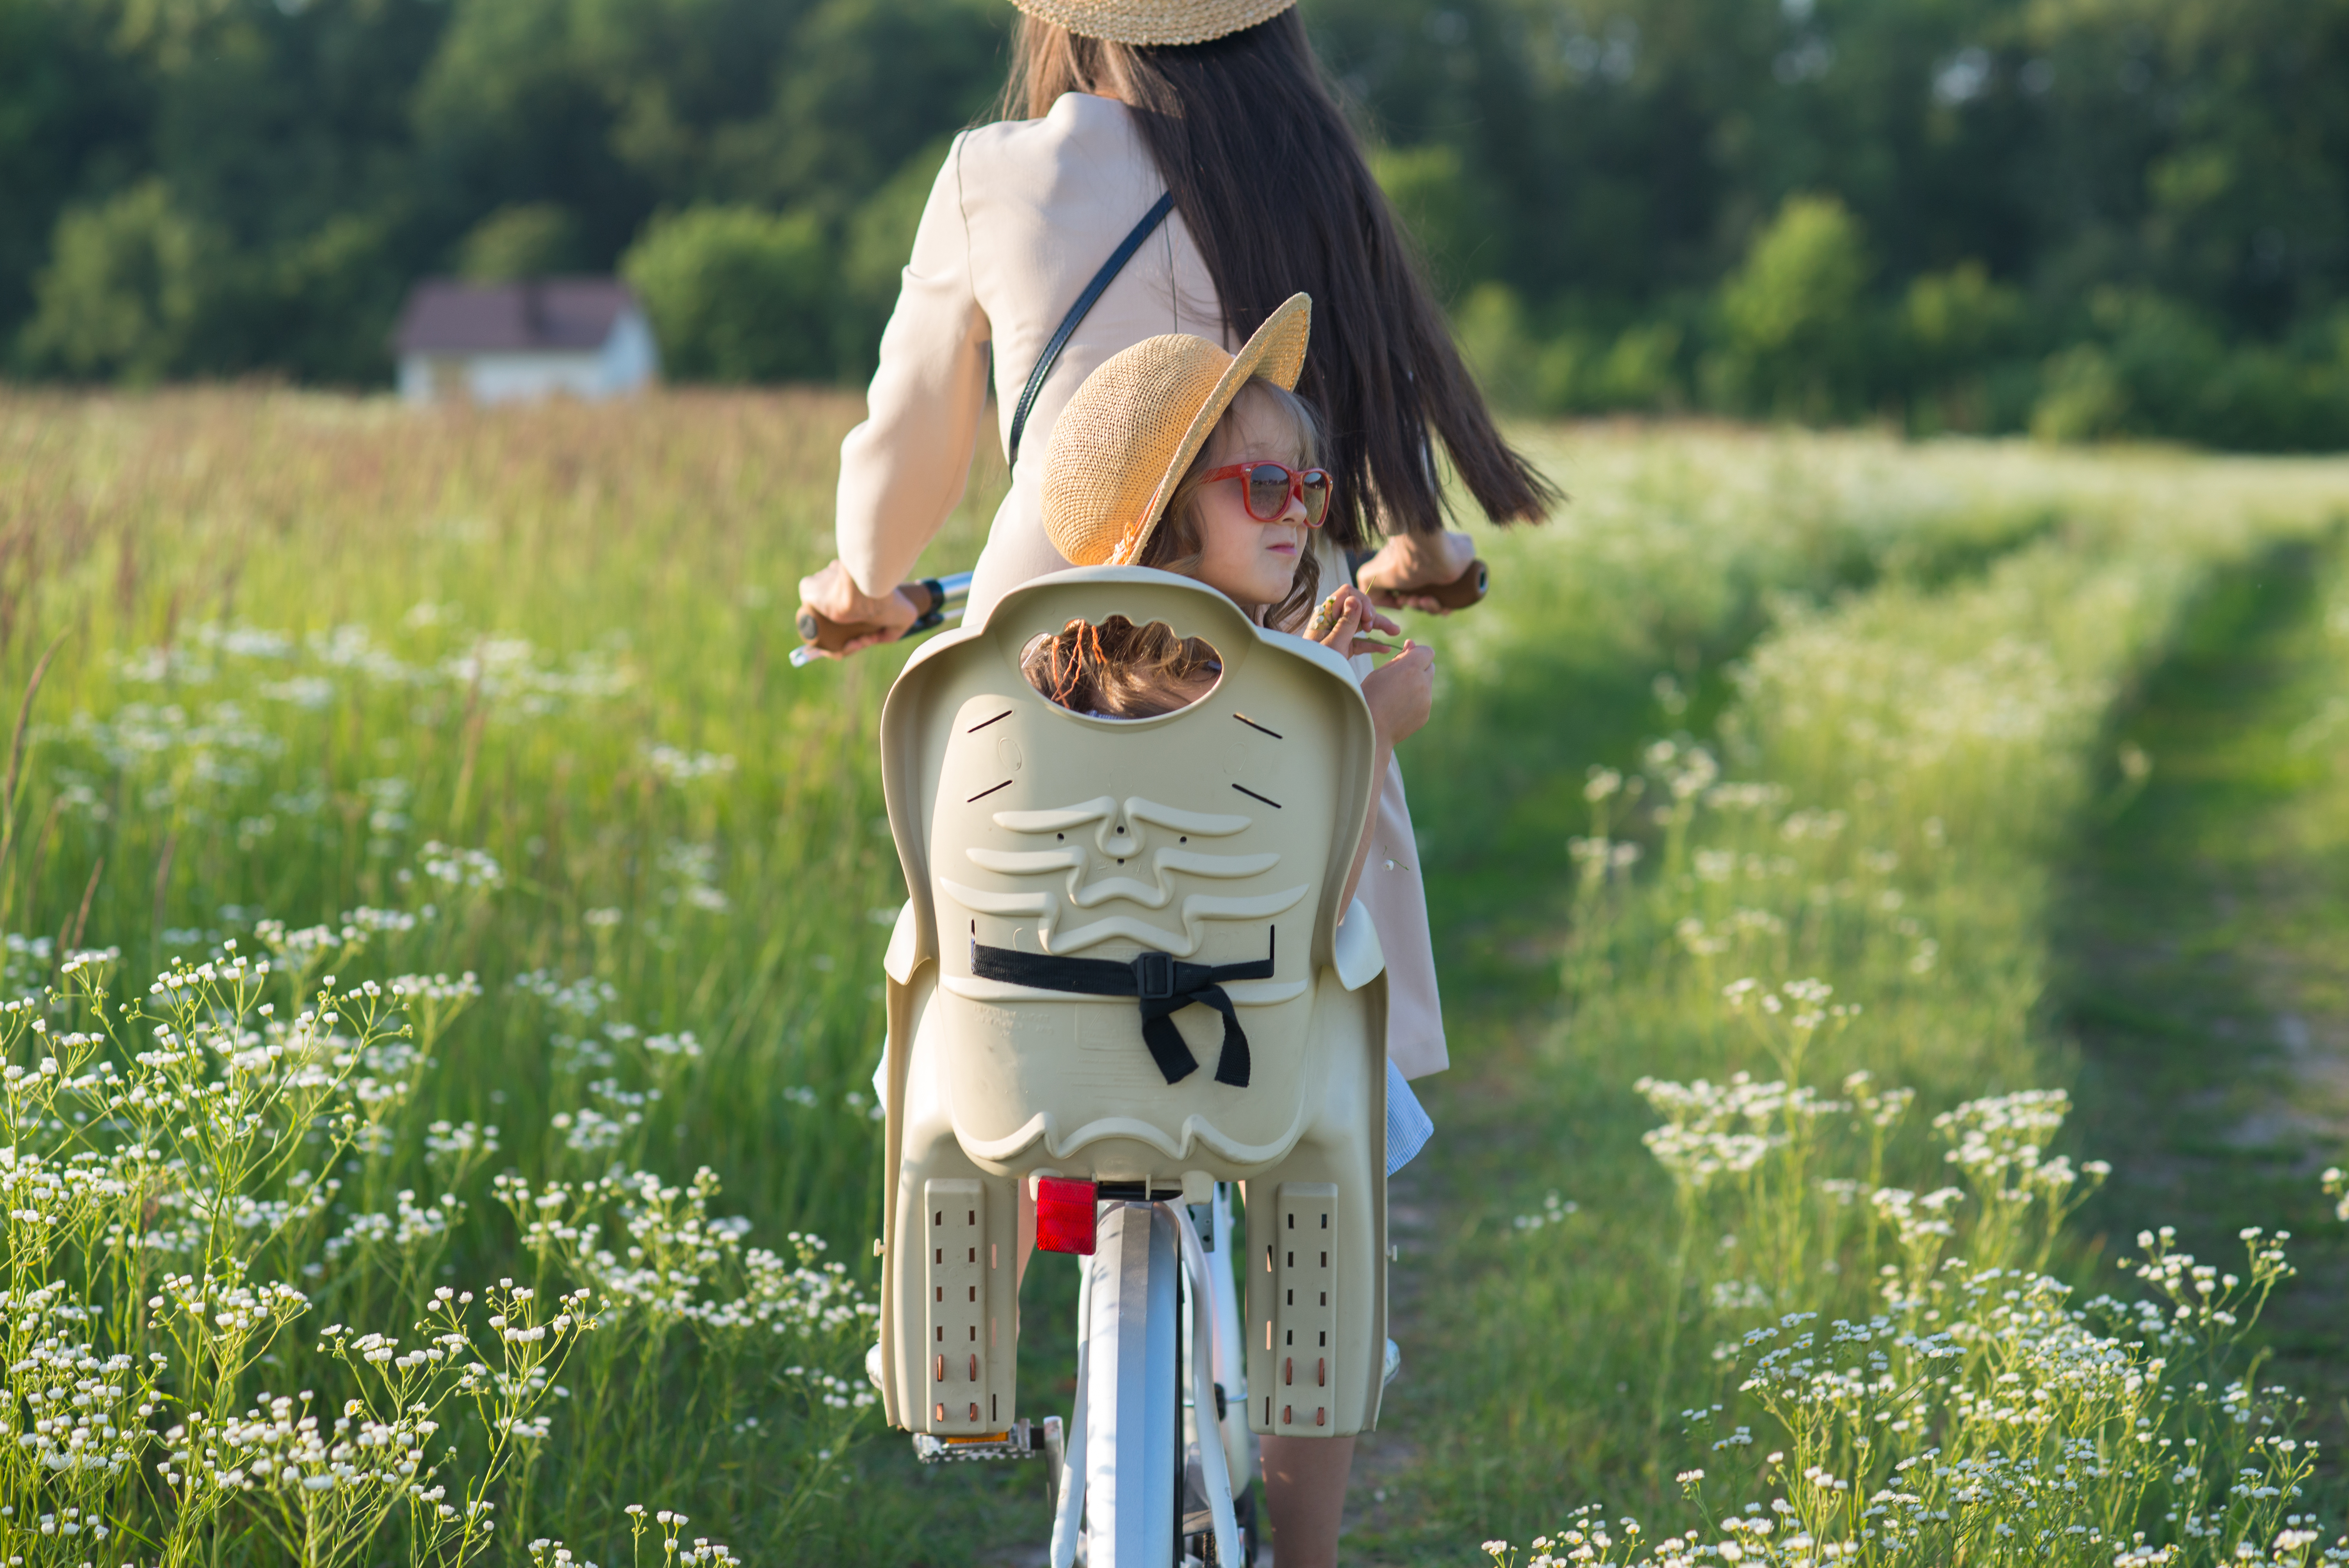 Kid in bike seat riding through a field